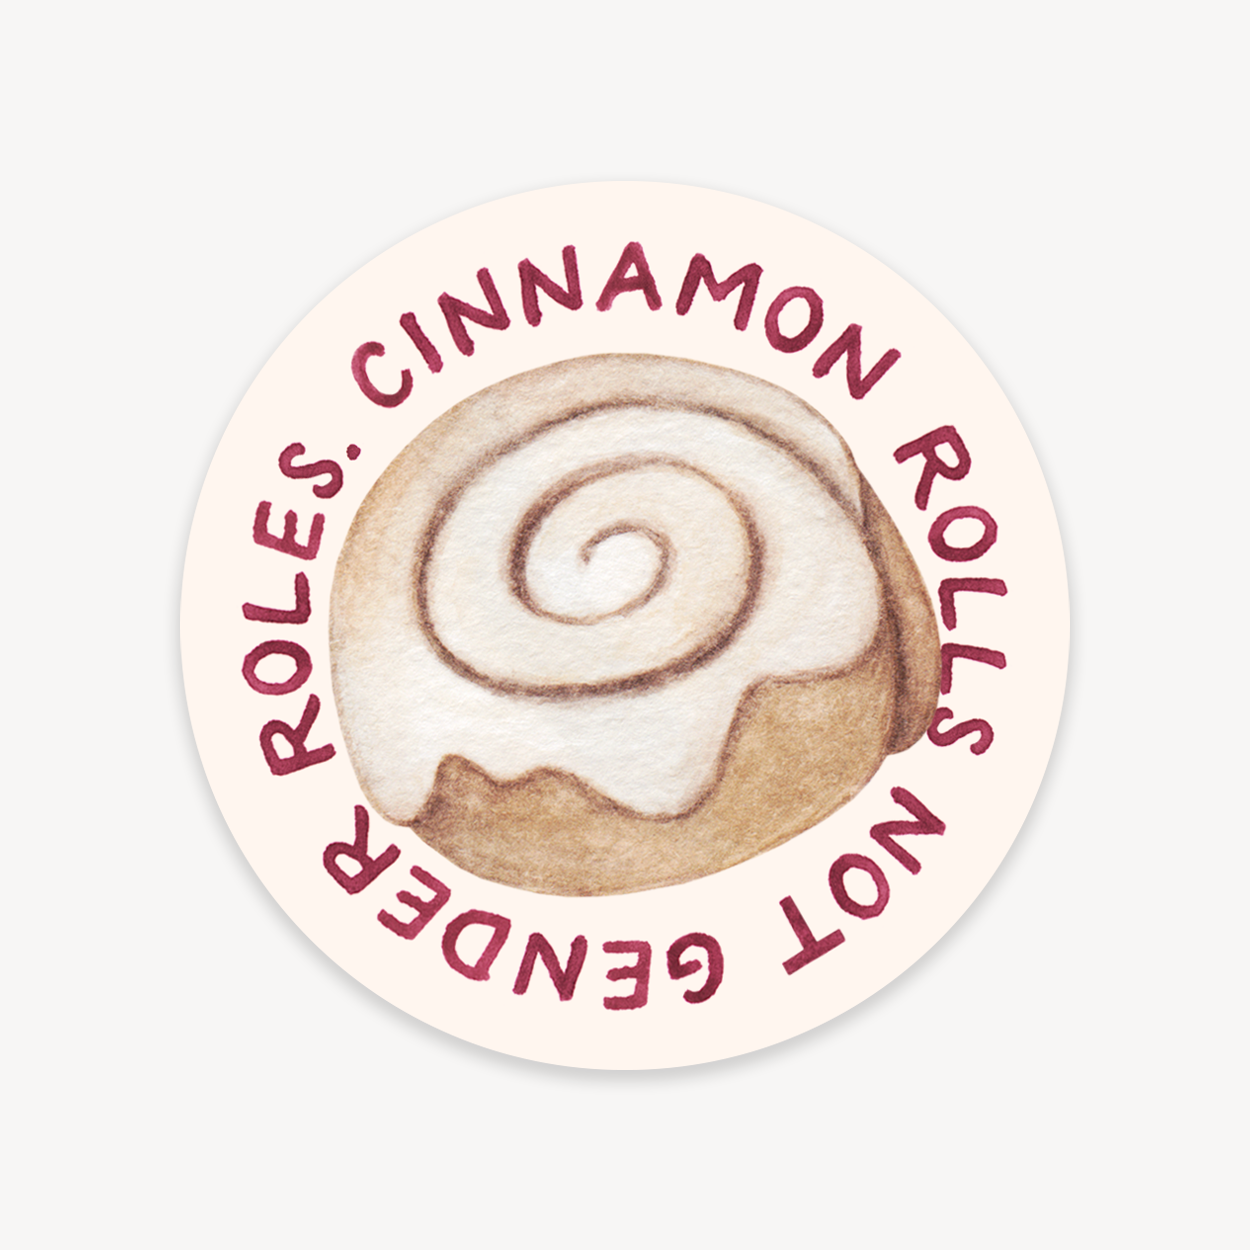 Cinnamon Rolls Not Gender Roles Sticker